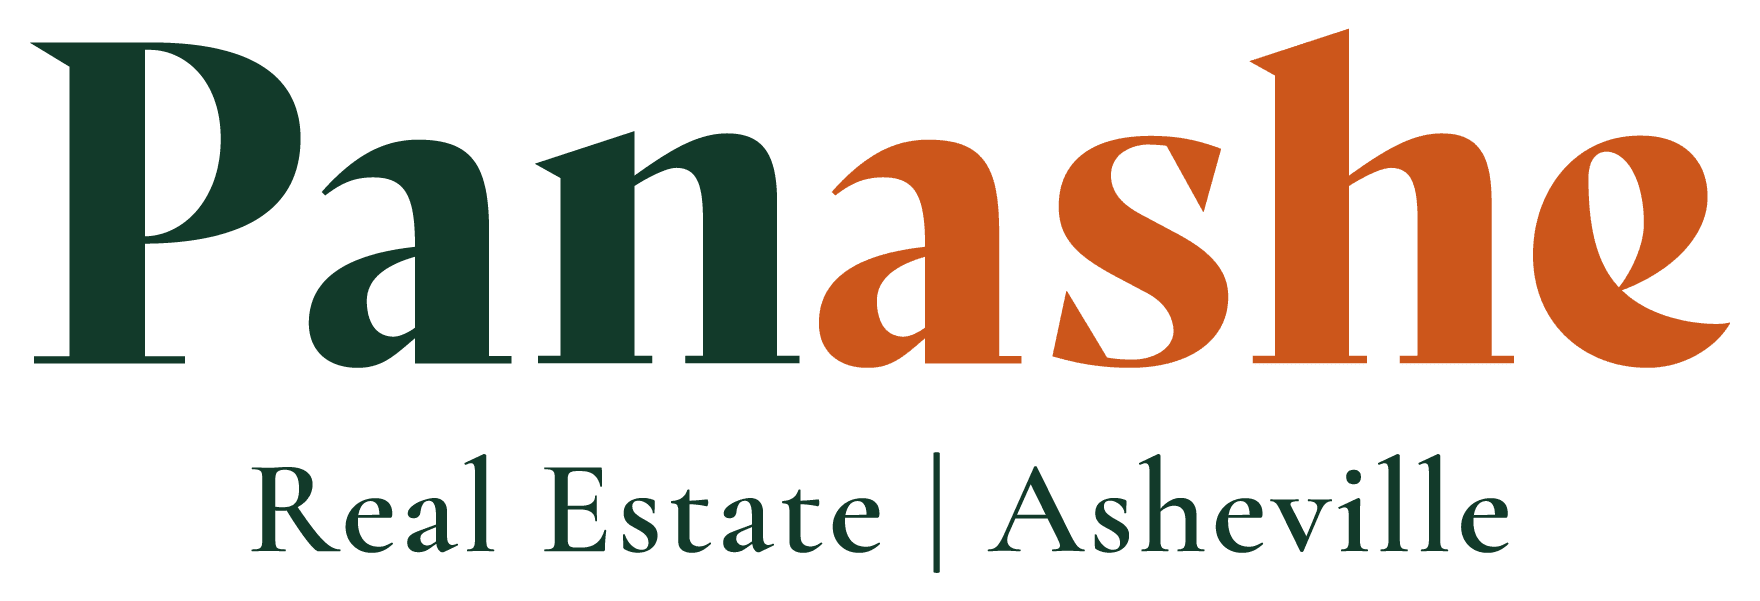 Panashe Real Estate Asheville